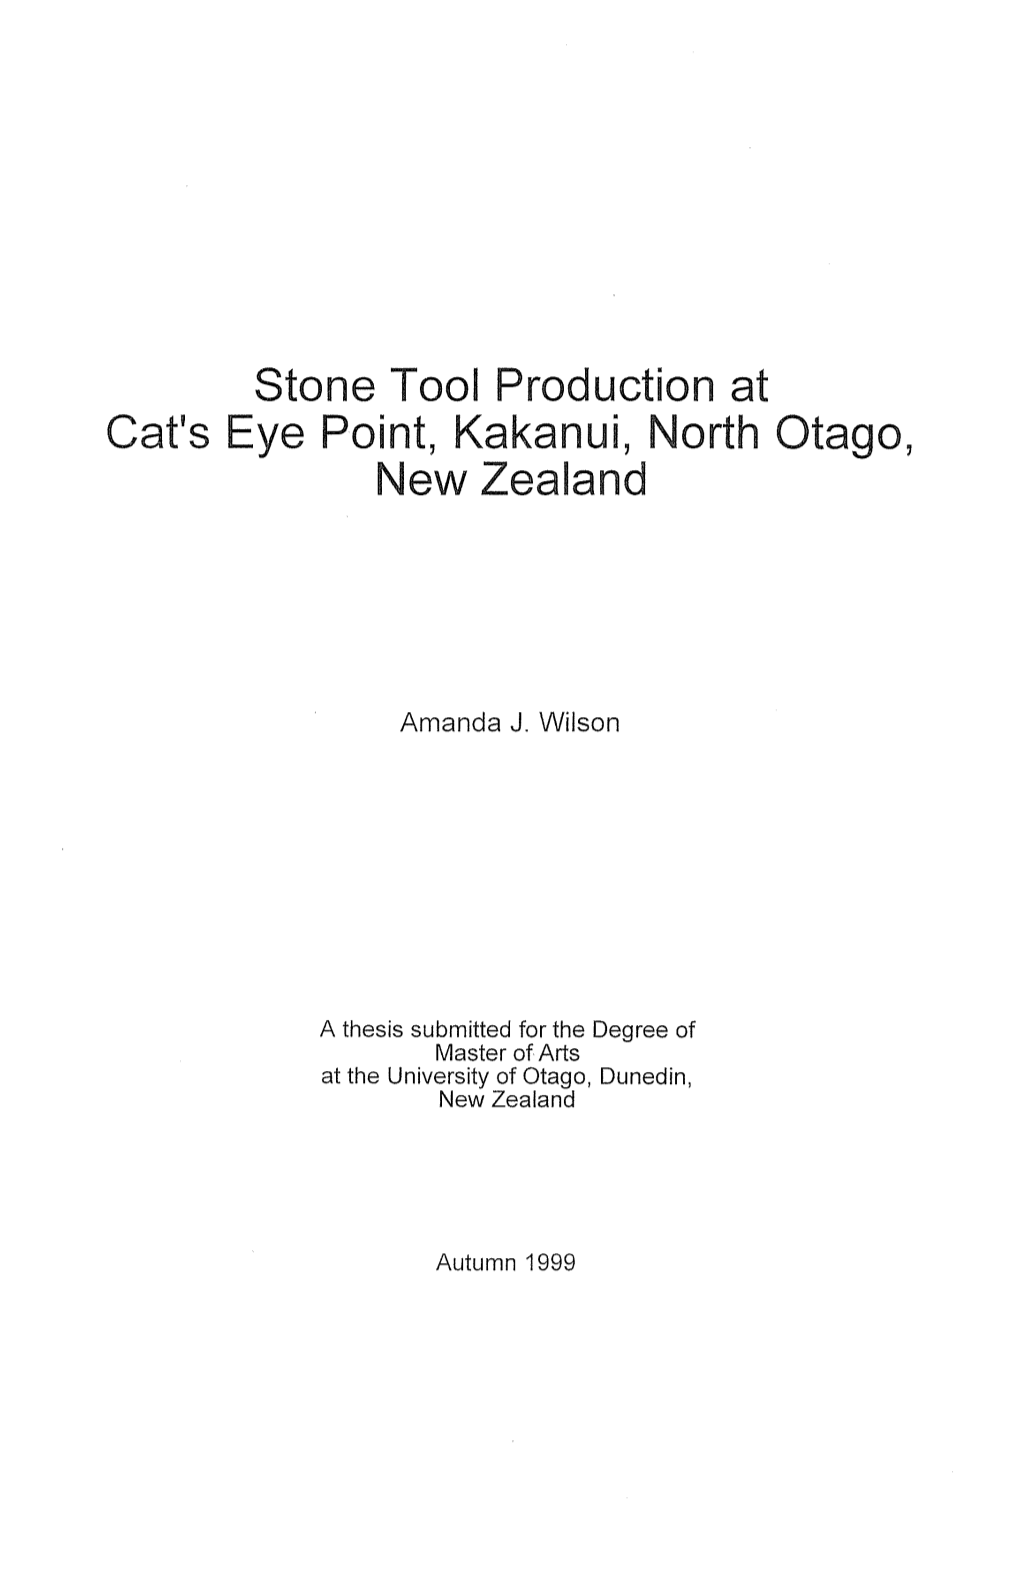 Stone Tool Production at Cat's Eye Point, Kakanui, North Otago, New Zealand